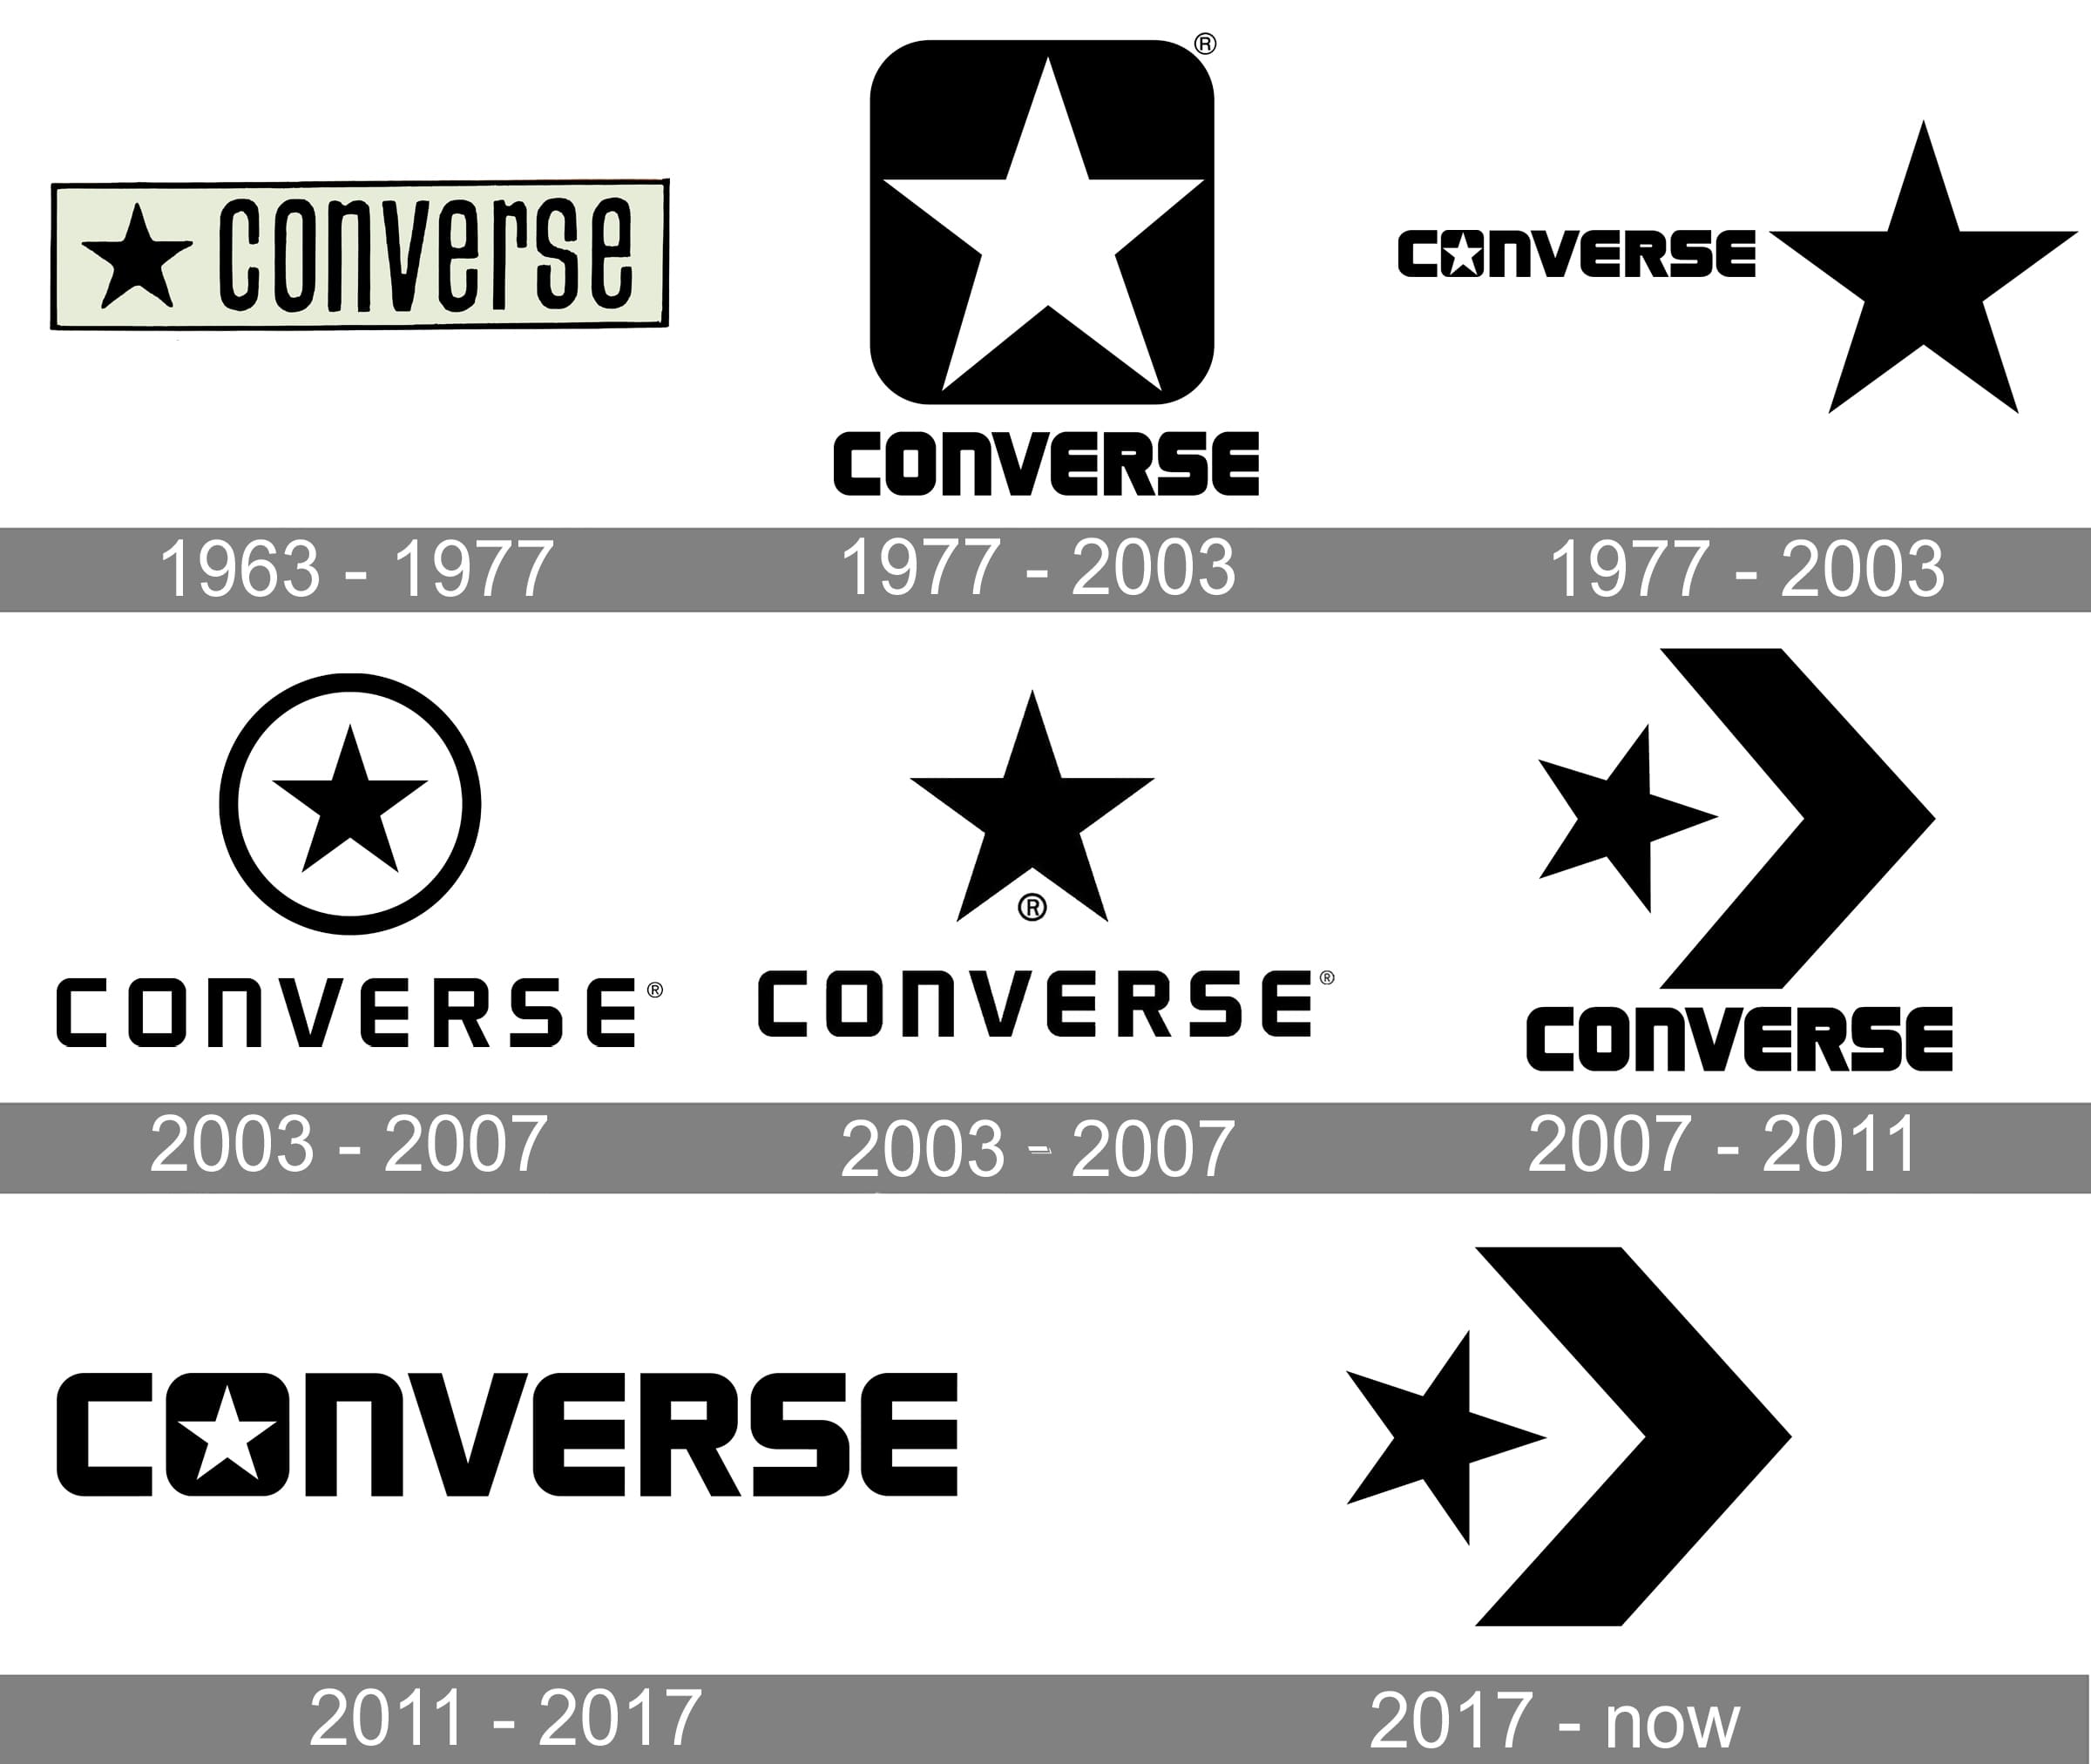 Did Converse Change Their Logo?